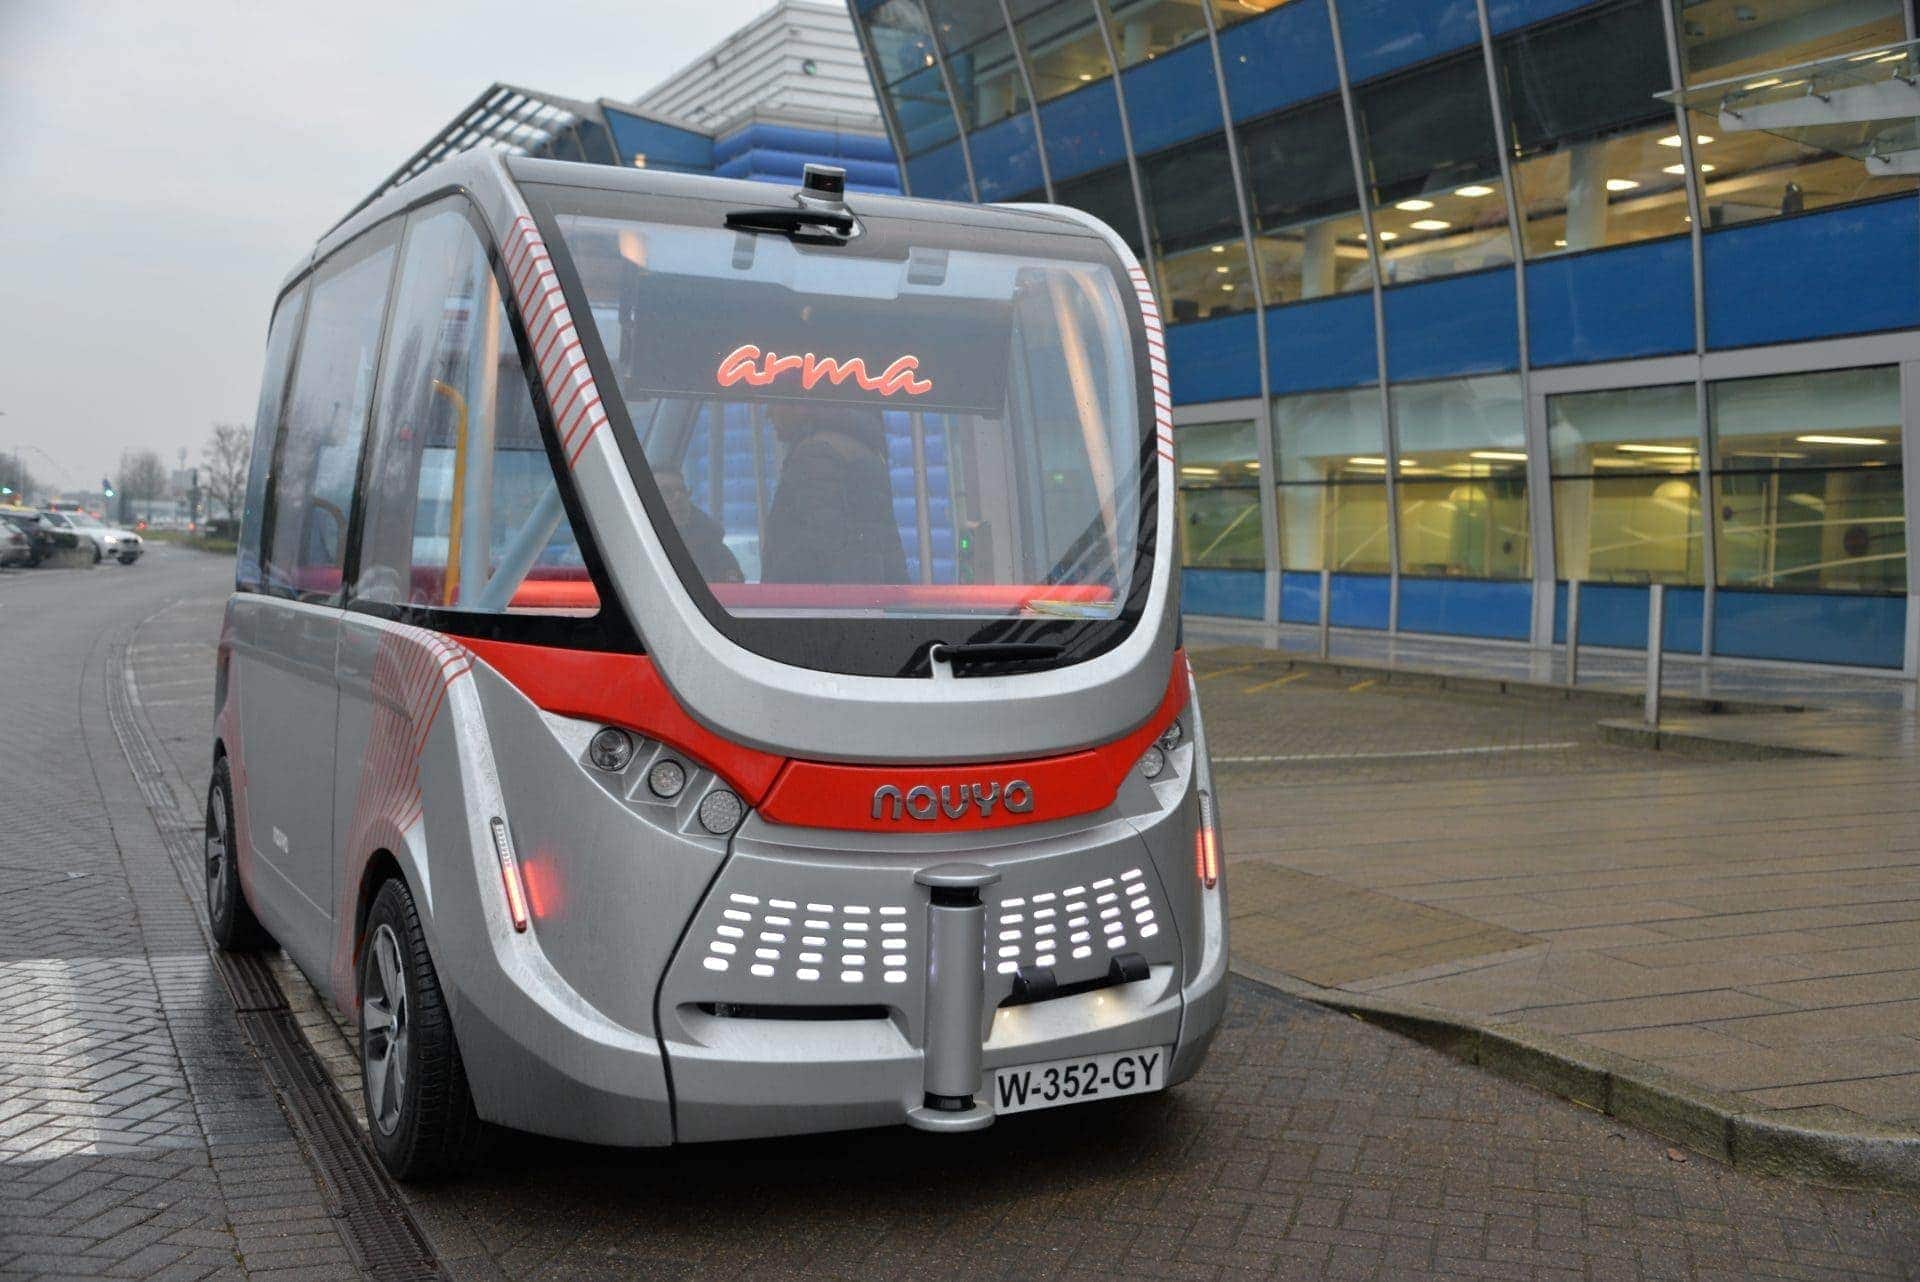 driverless vehicle at Heathrow